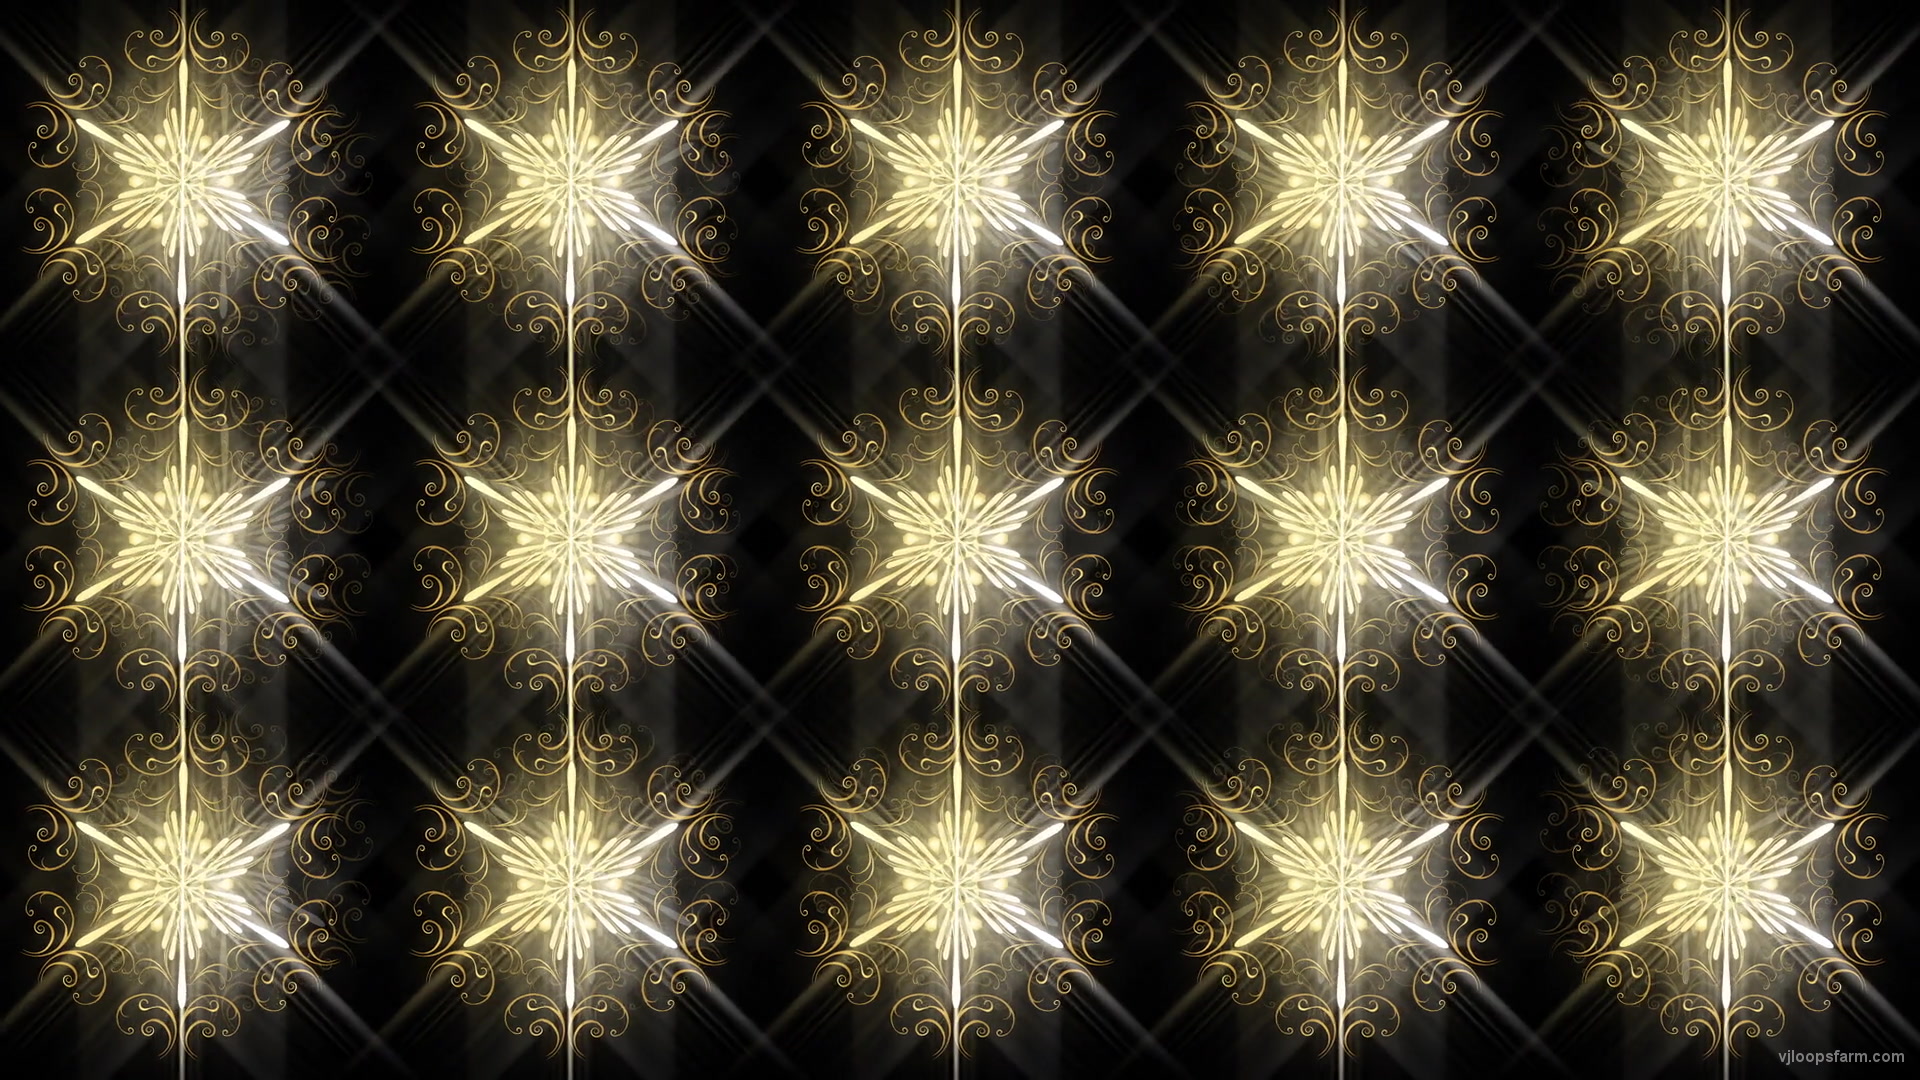 Snowflake gold stars pattern with rays Ultra HD VJ Loop